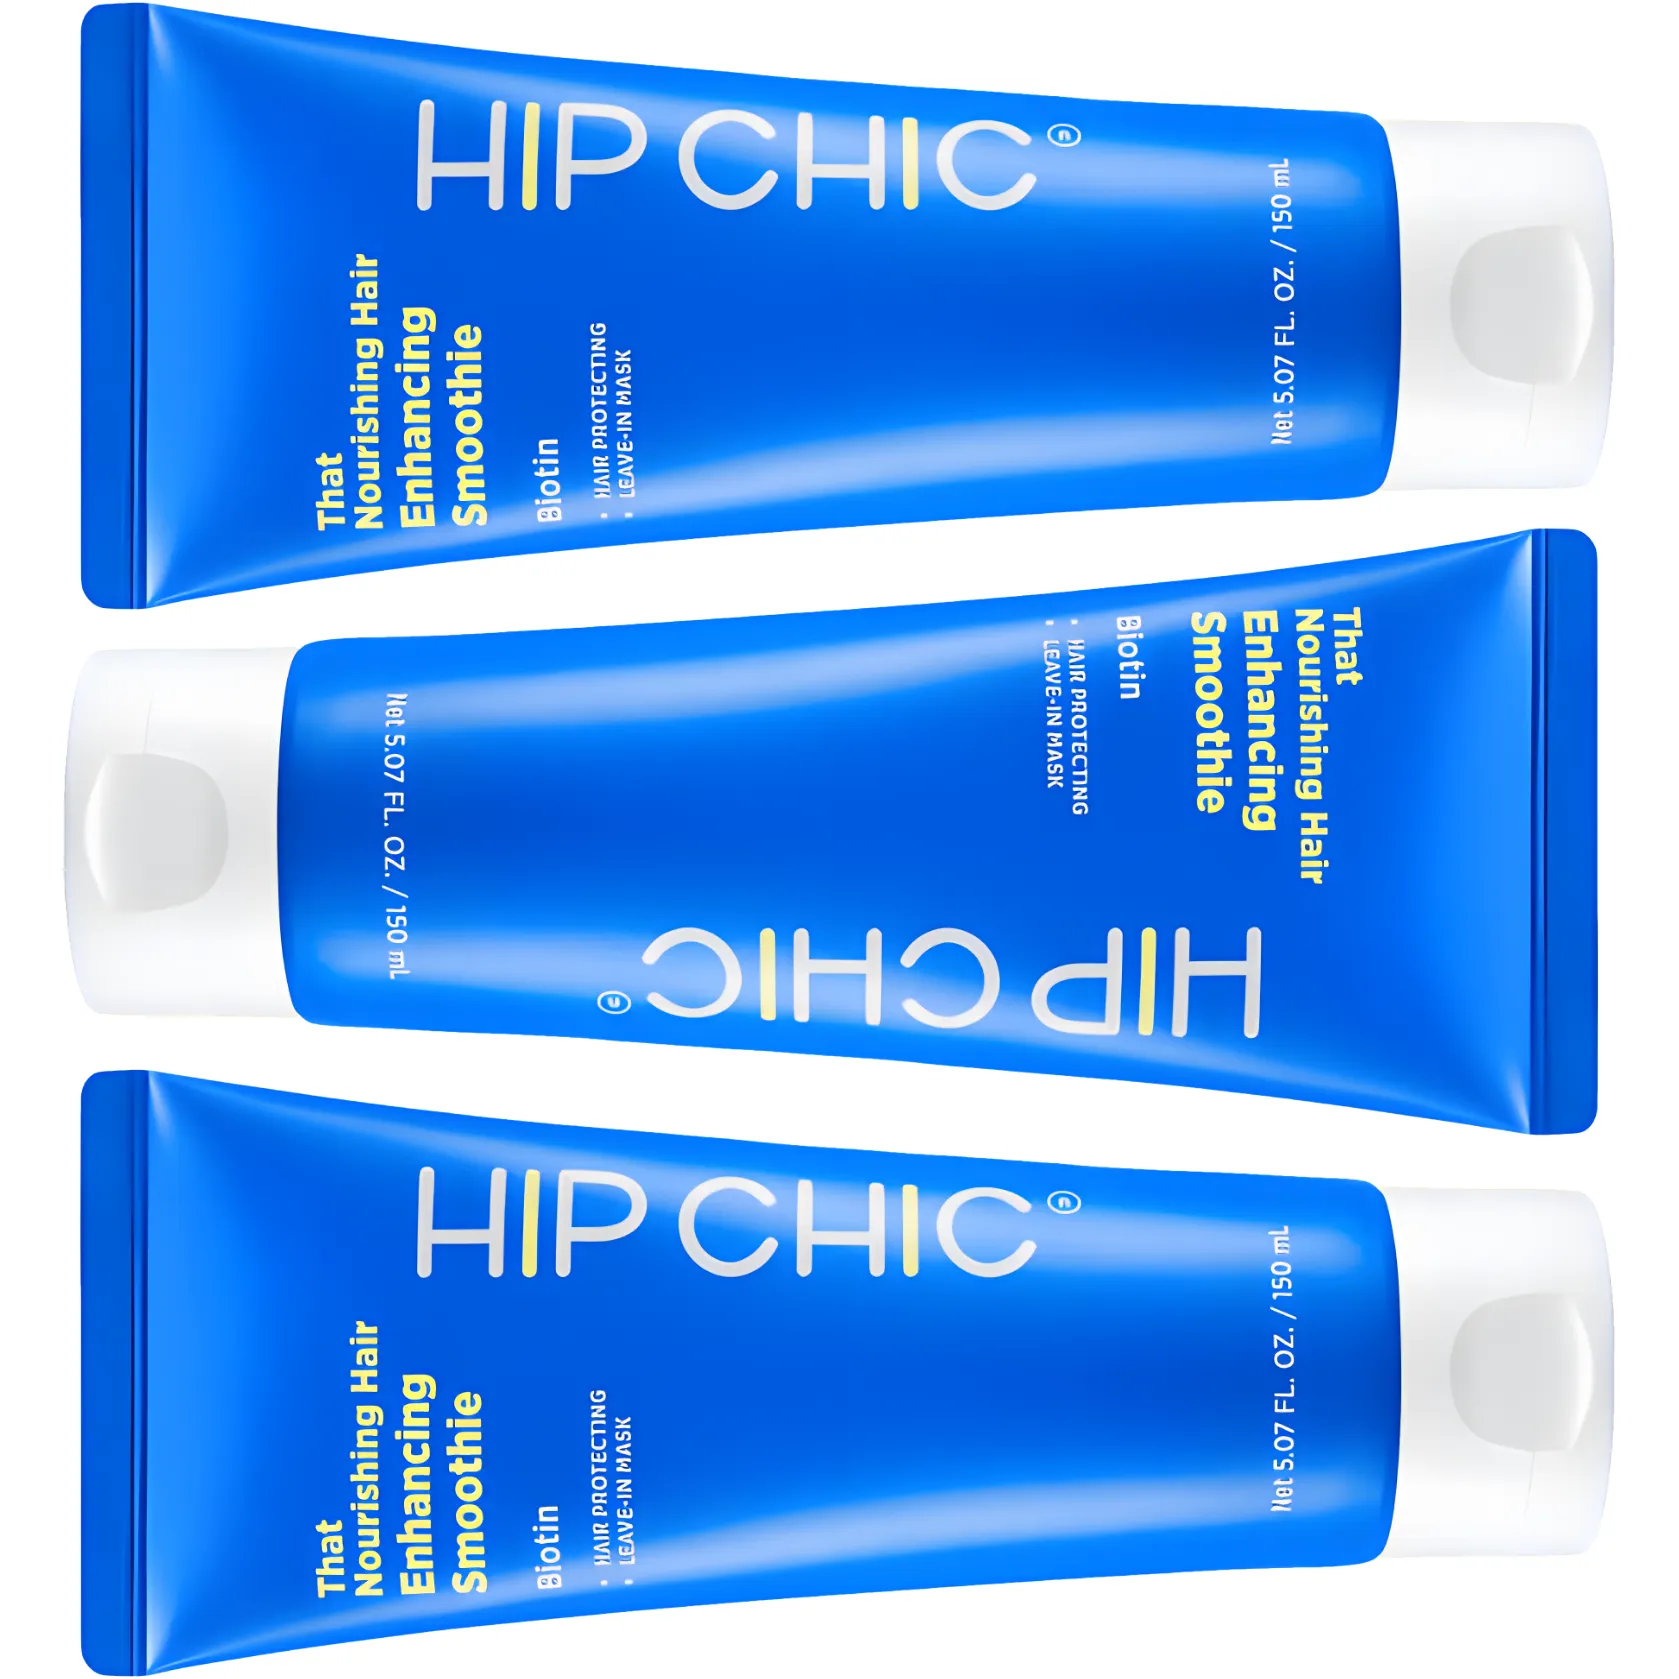 Free Hip Chic Nourishing Hair Discovery Kit + Free S&H